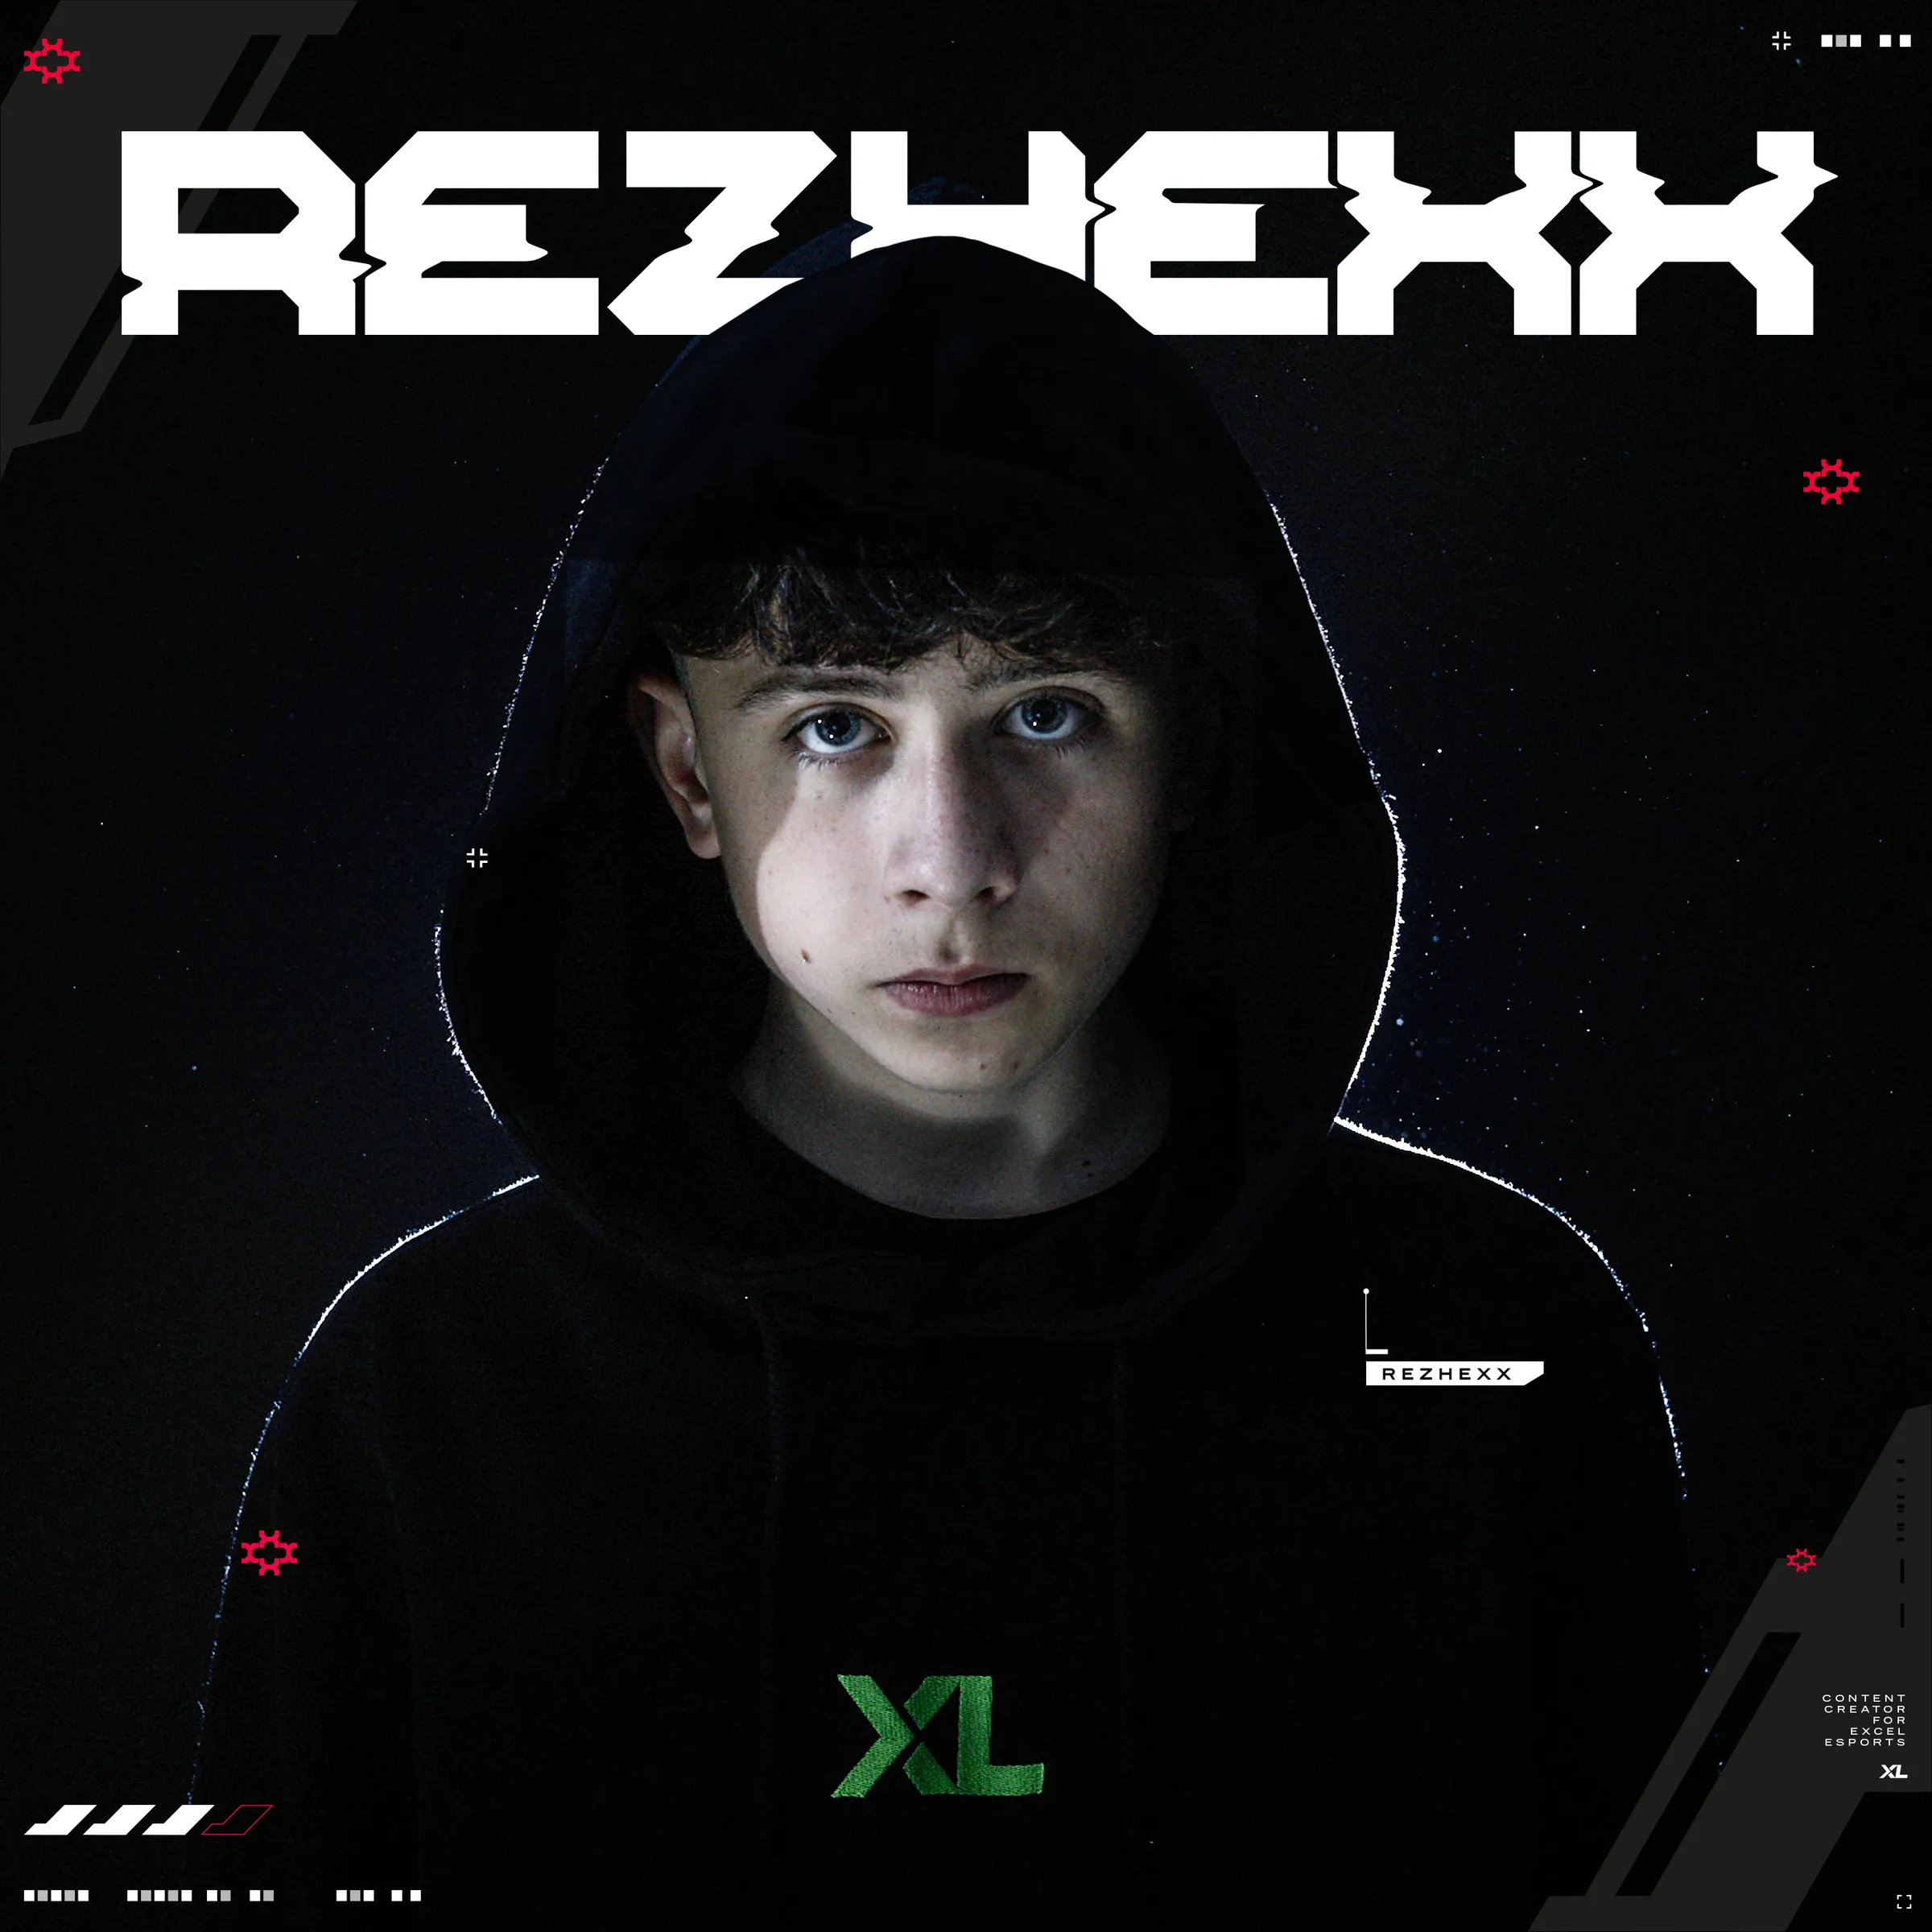 Excel member REZHEXX